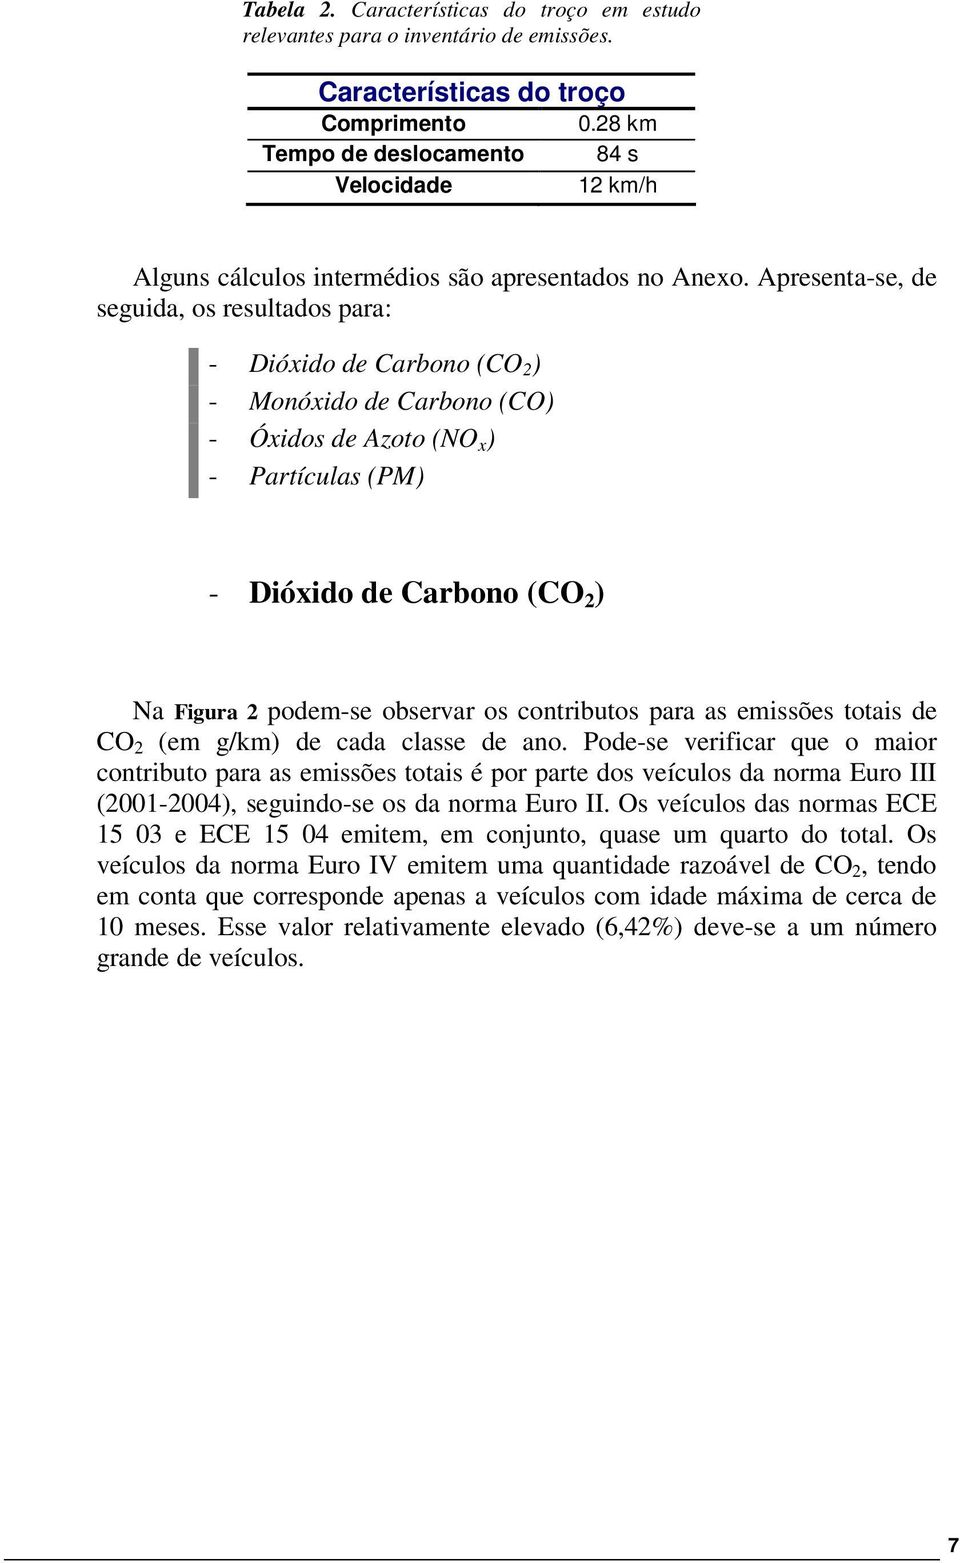 Apresenta-se, de seguida, os resultados para: - Dióxido de Carbono (CO 2 ) - Monóxido de Carbono (CO) - Óxidos de Azoto (NO x ) - Partículas (PM) - Dióxido de Carbono (CO 2 ) Na Figura 2 podem-se